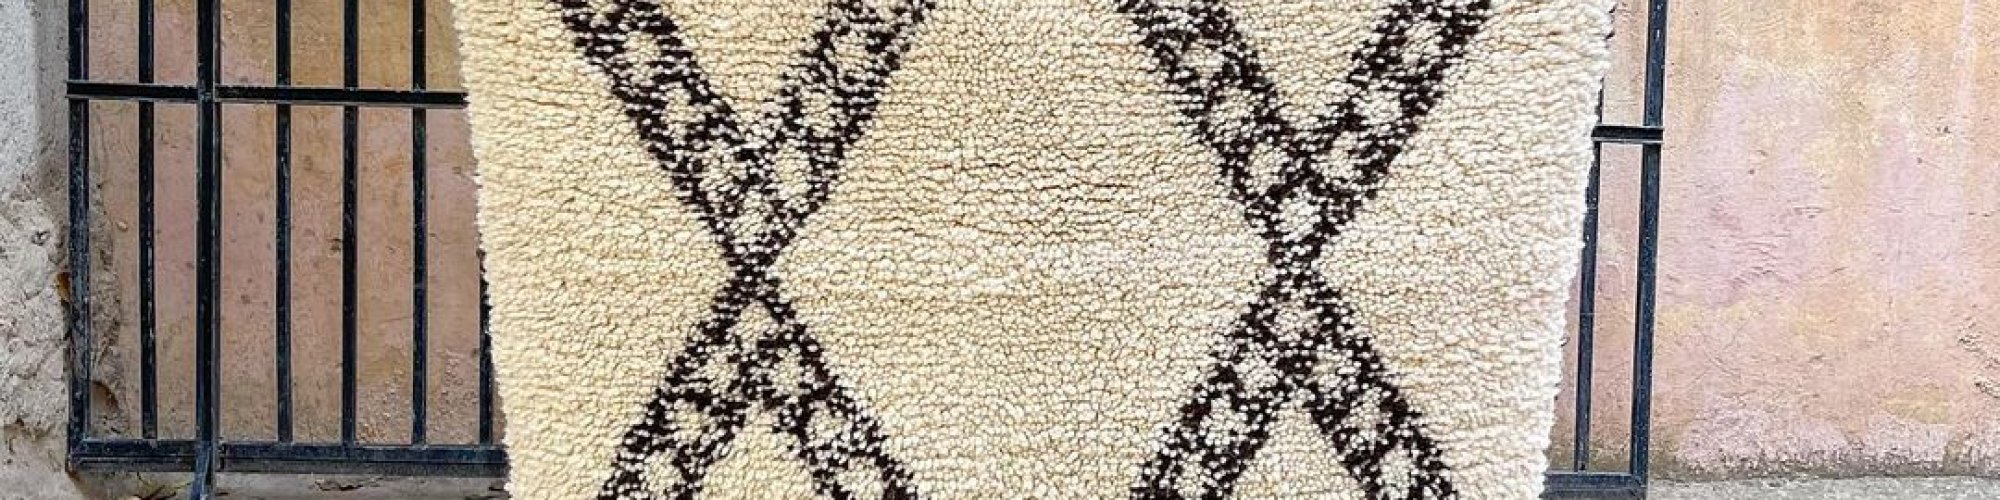 berber rugs store LTD